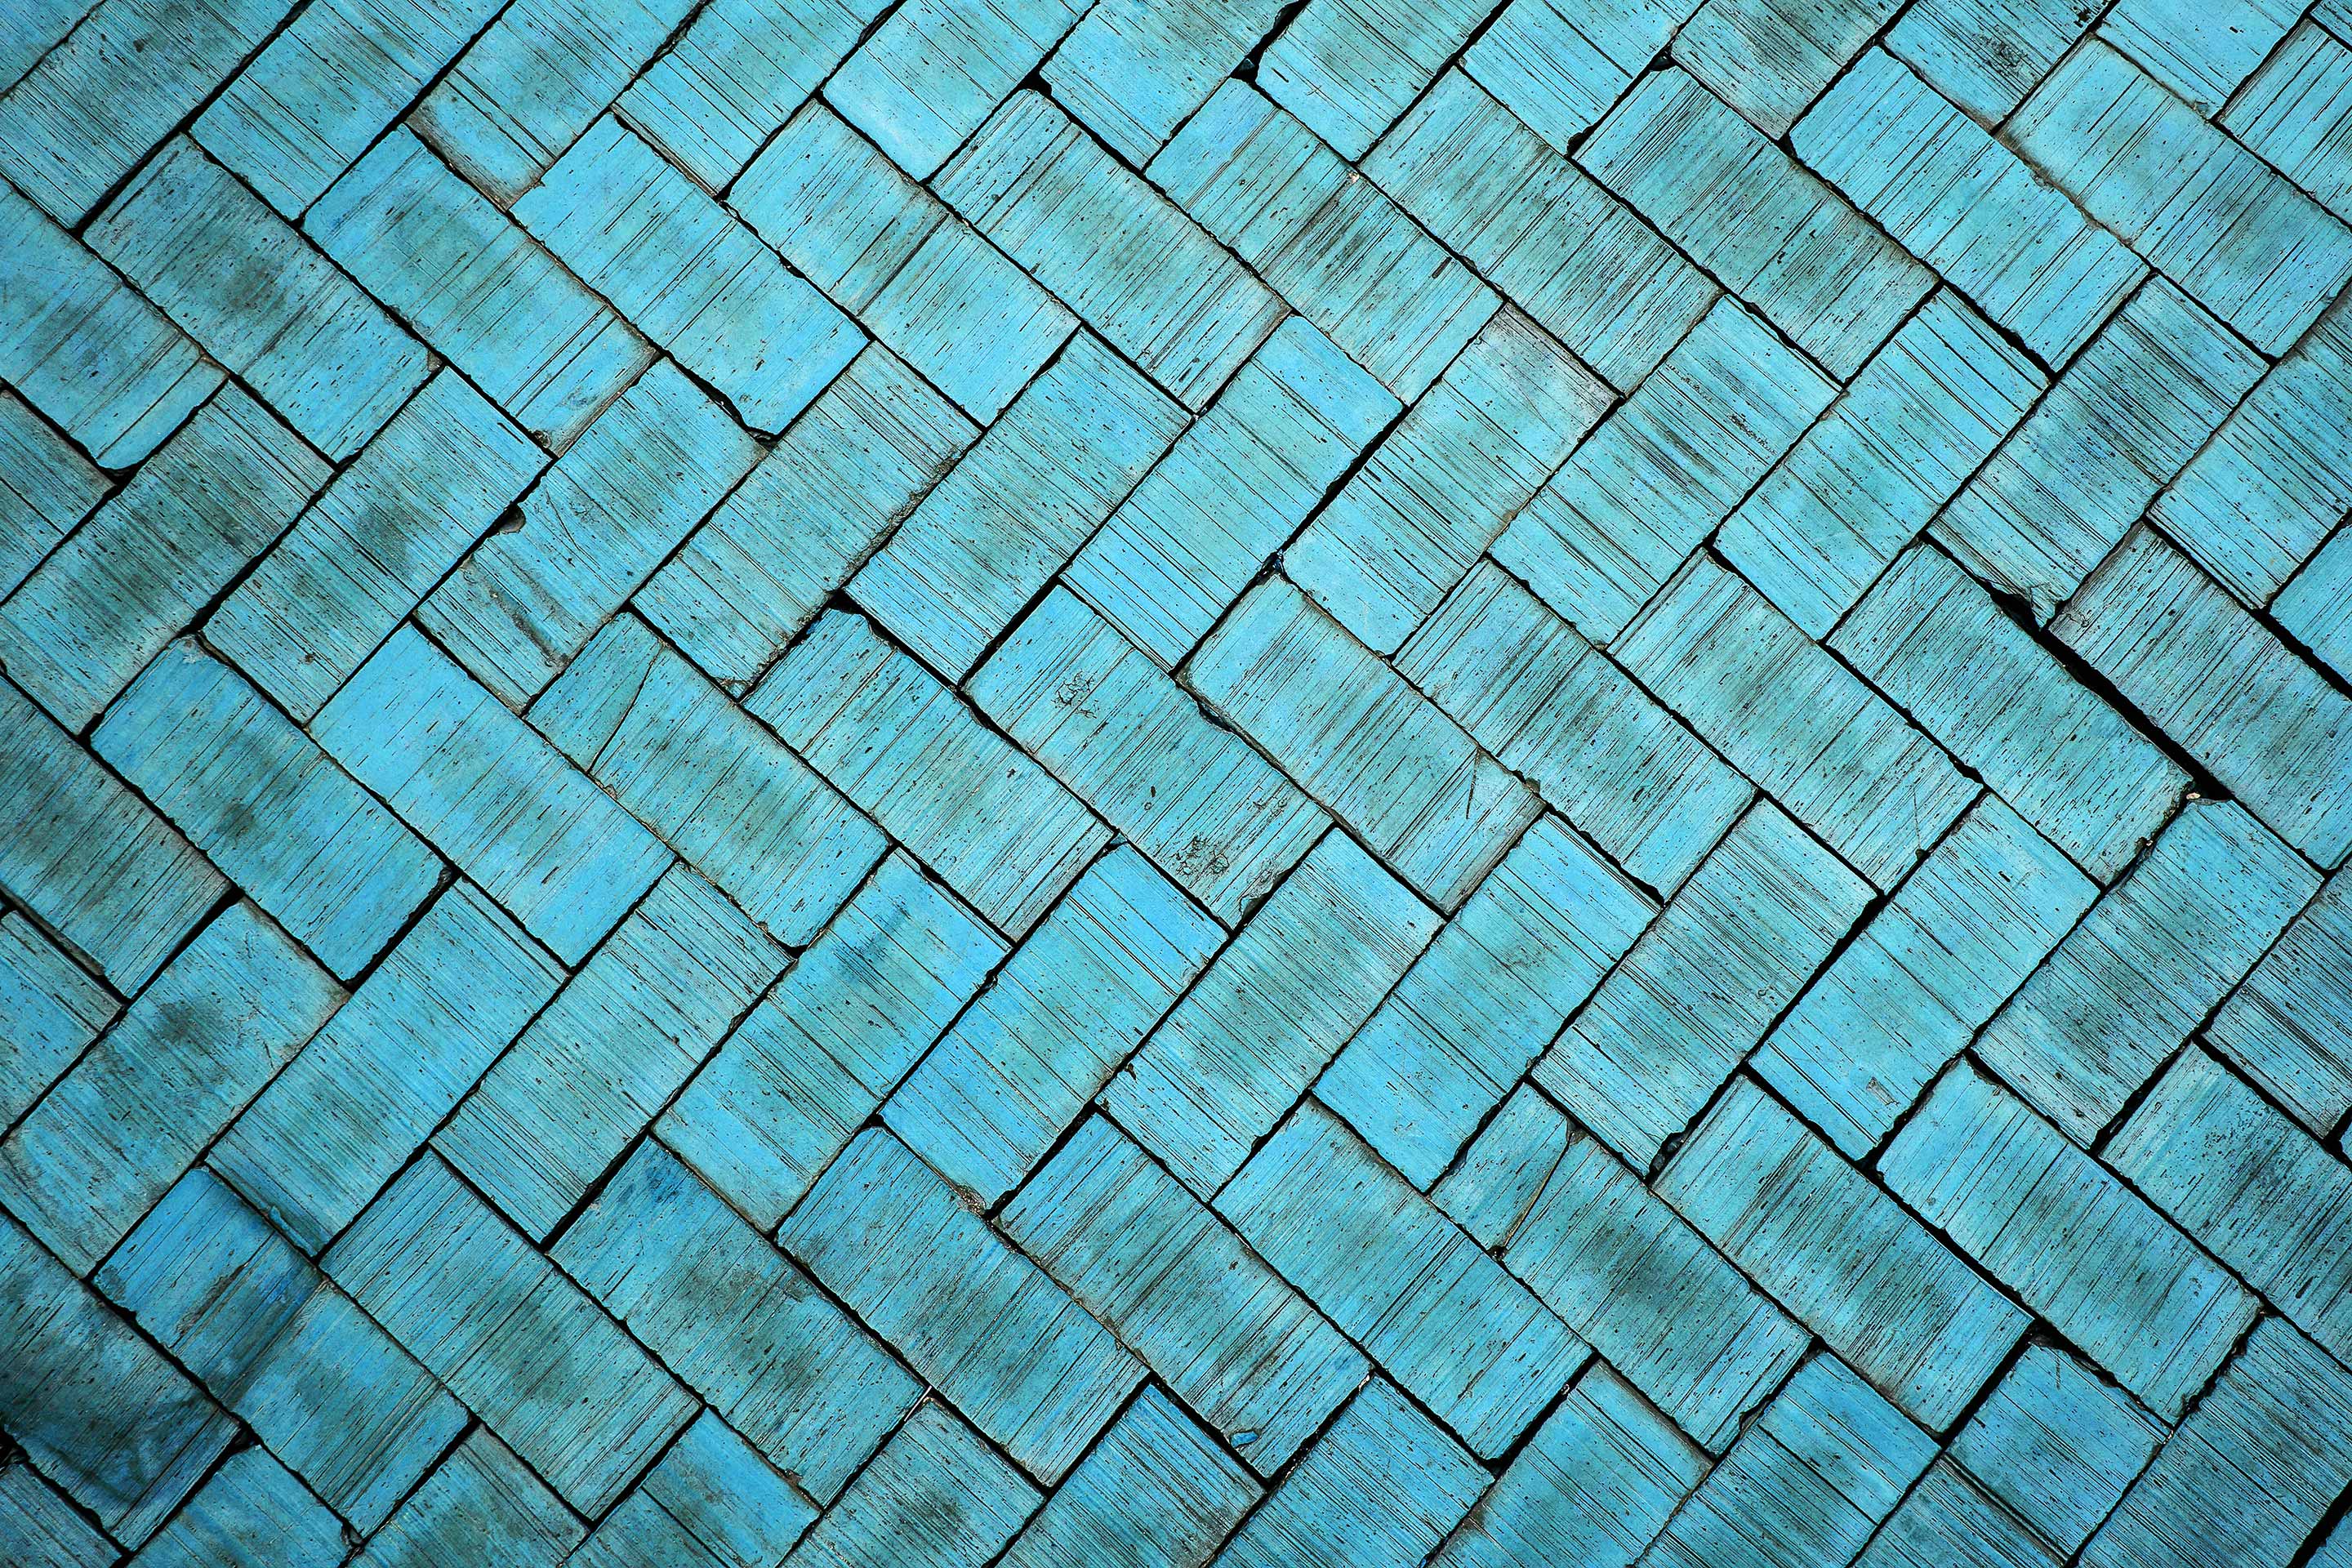 Textured, unusual blue tiles represent customization